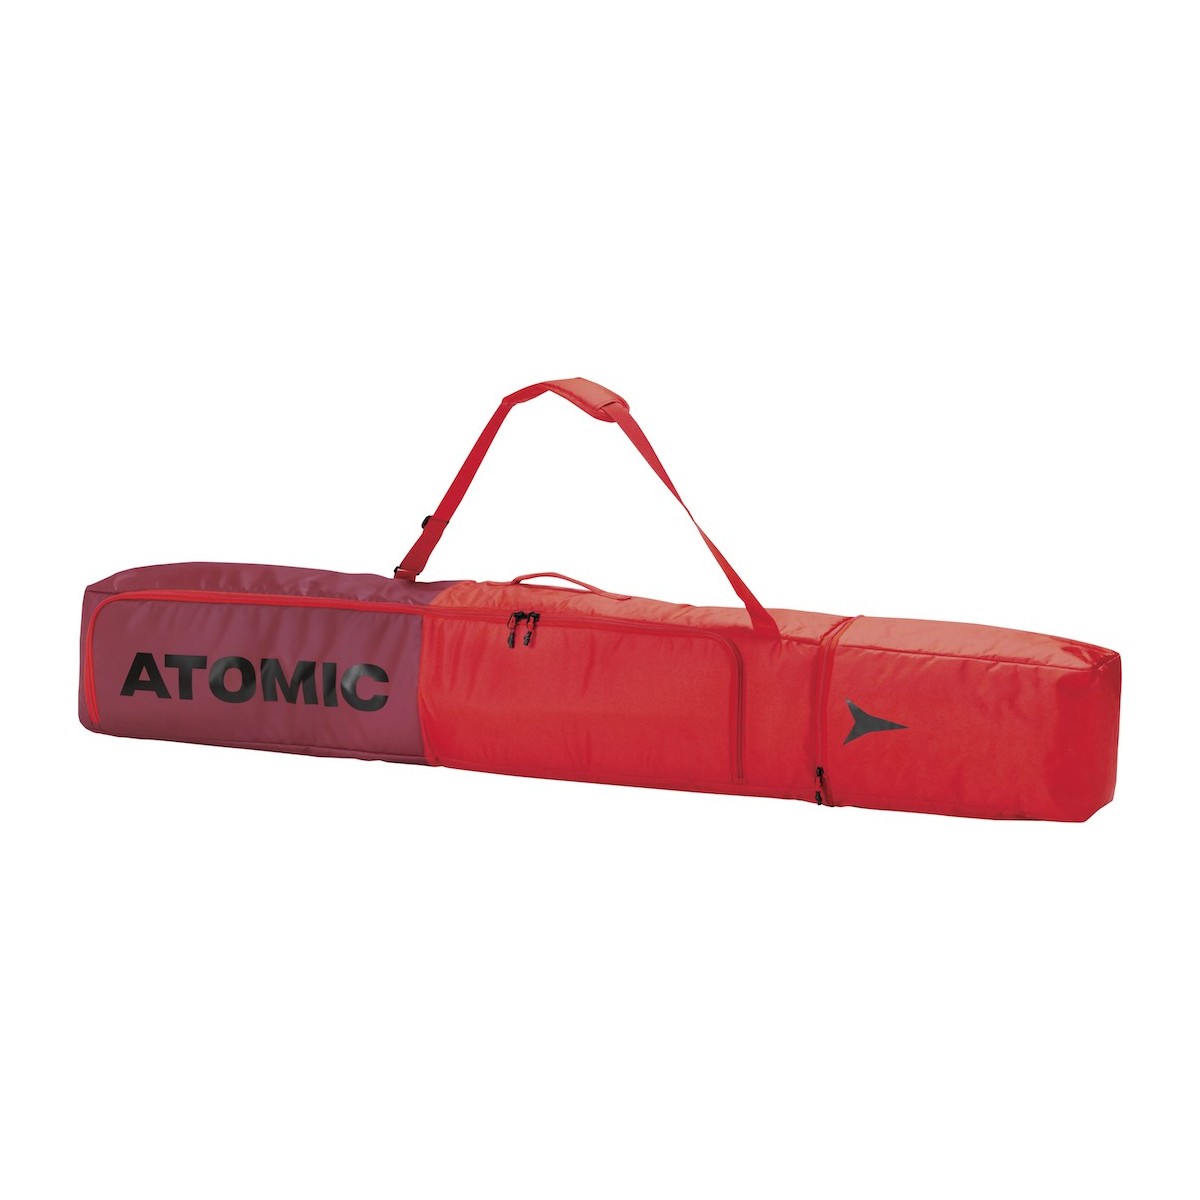 ATOMIC DOUBLE SKI BAG RED/RIO RED